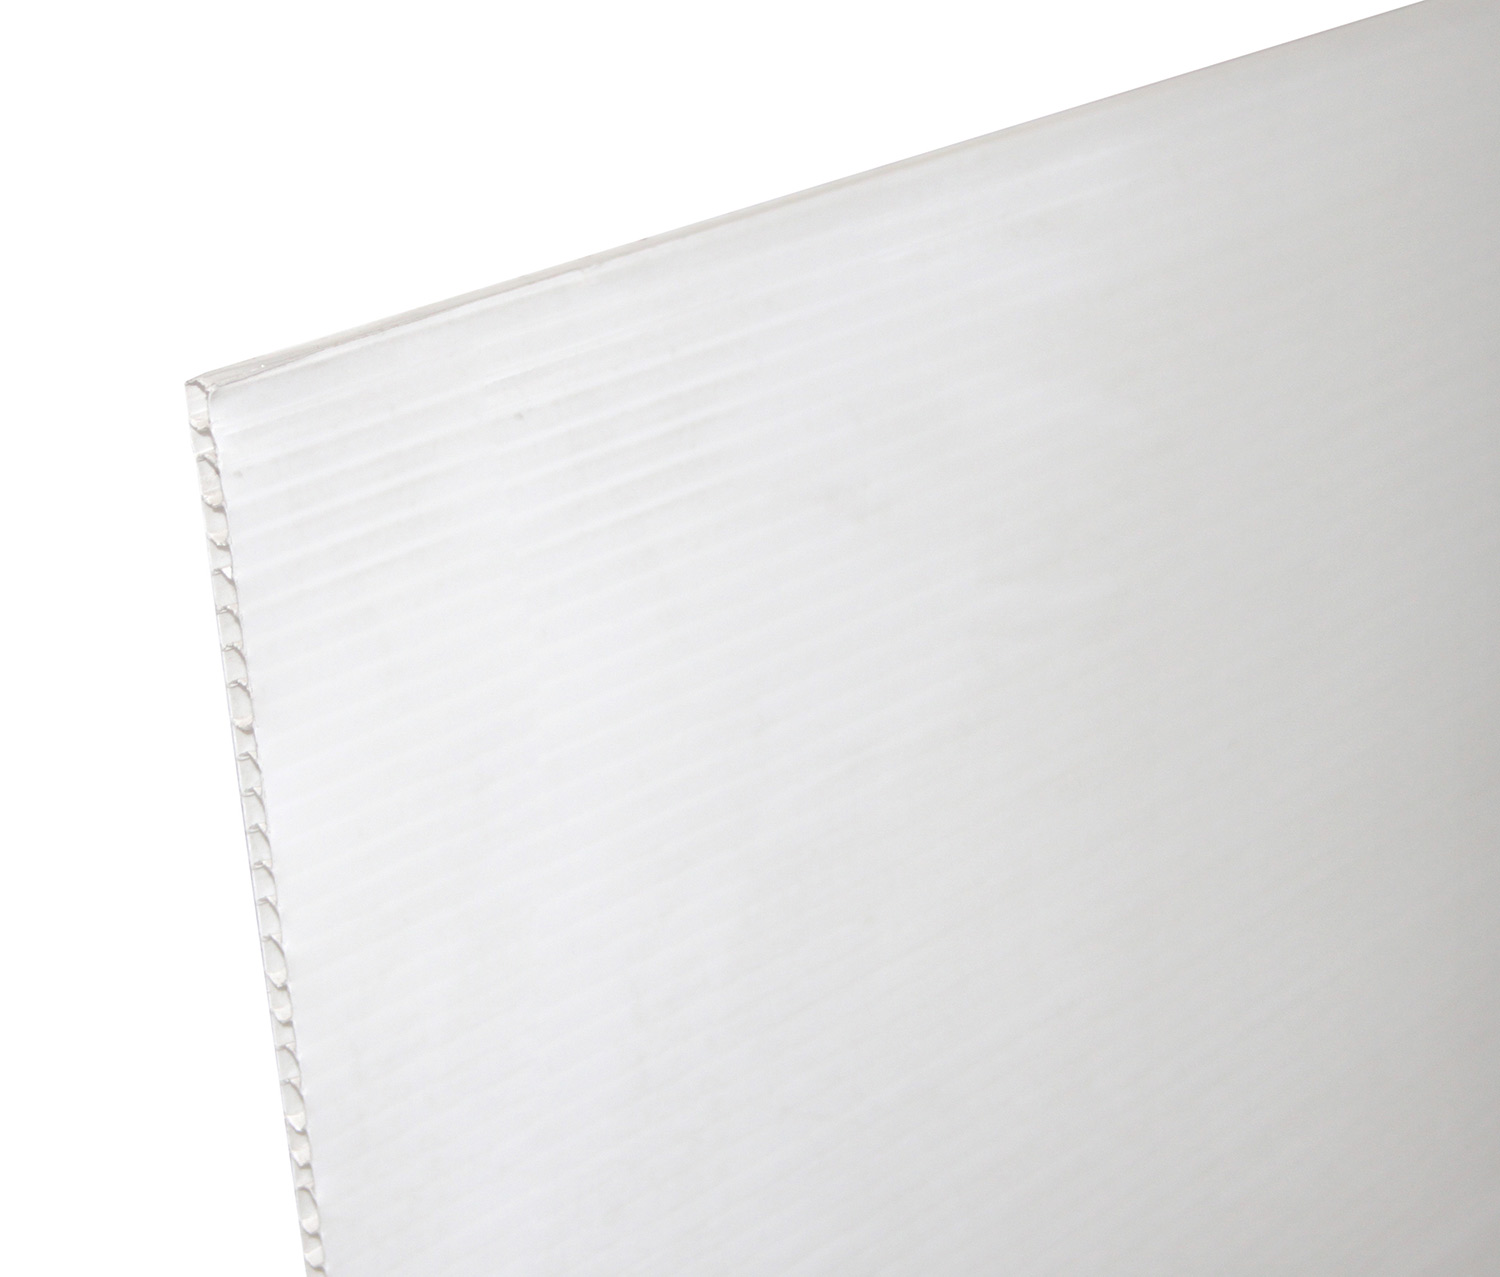 PP Corrugated Sheets - Sabin Plastic